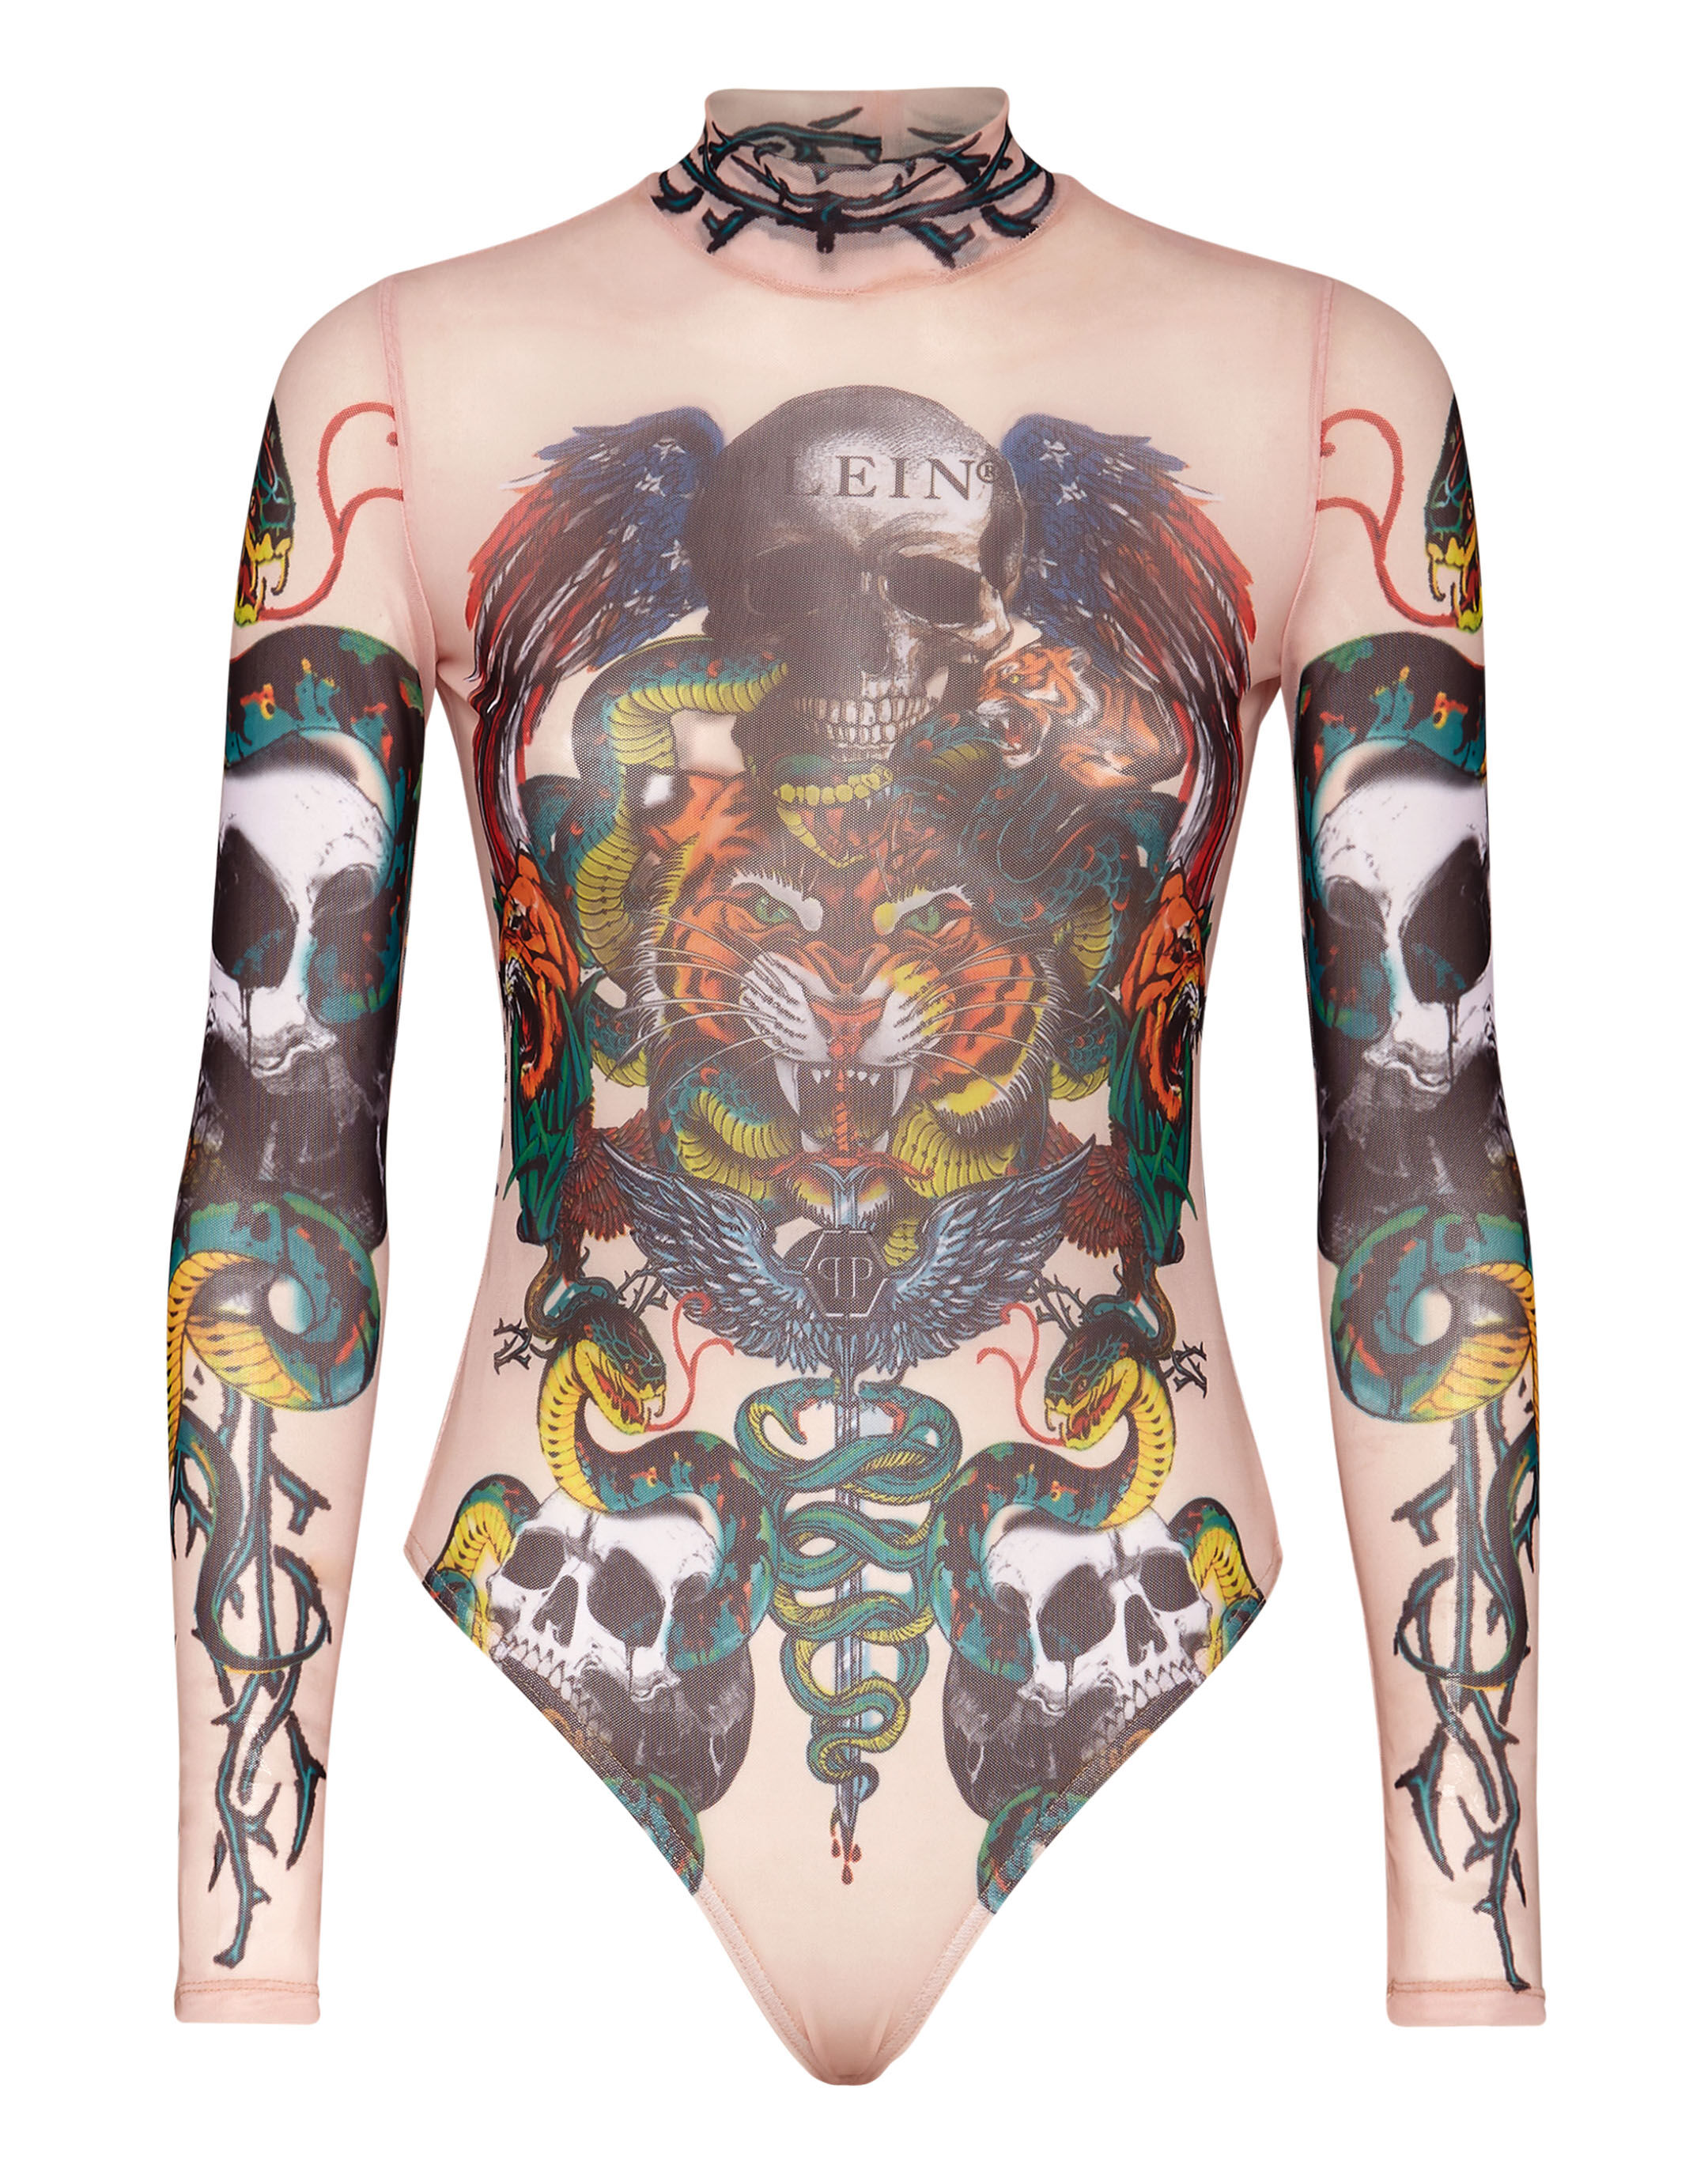 Bodysuit designs | Body suit tattoo, Tattoo japanese style, Japanese tattoo